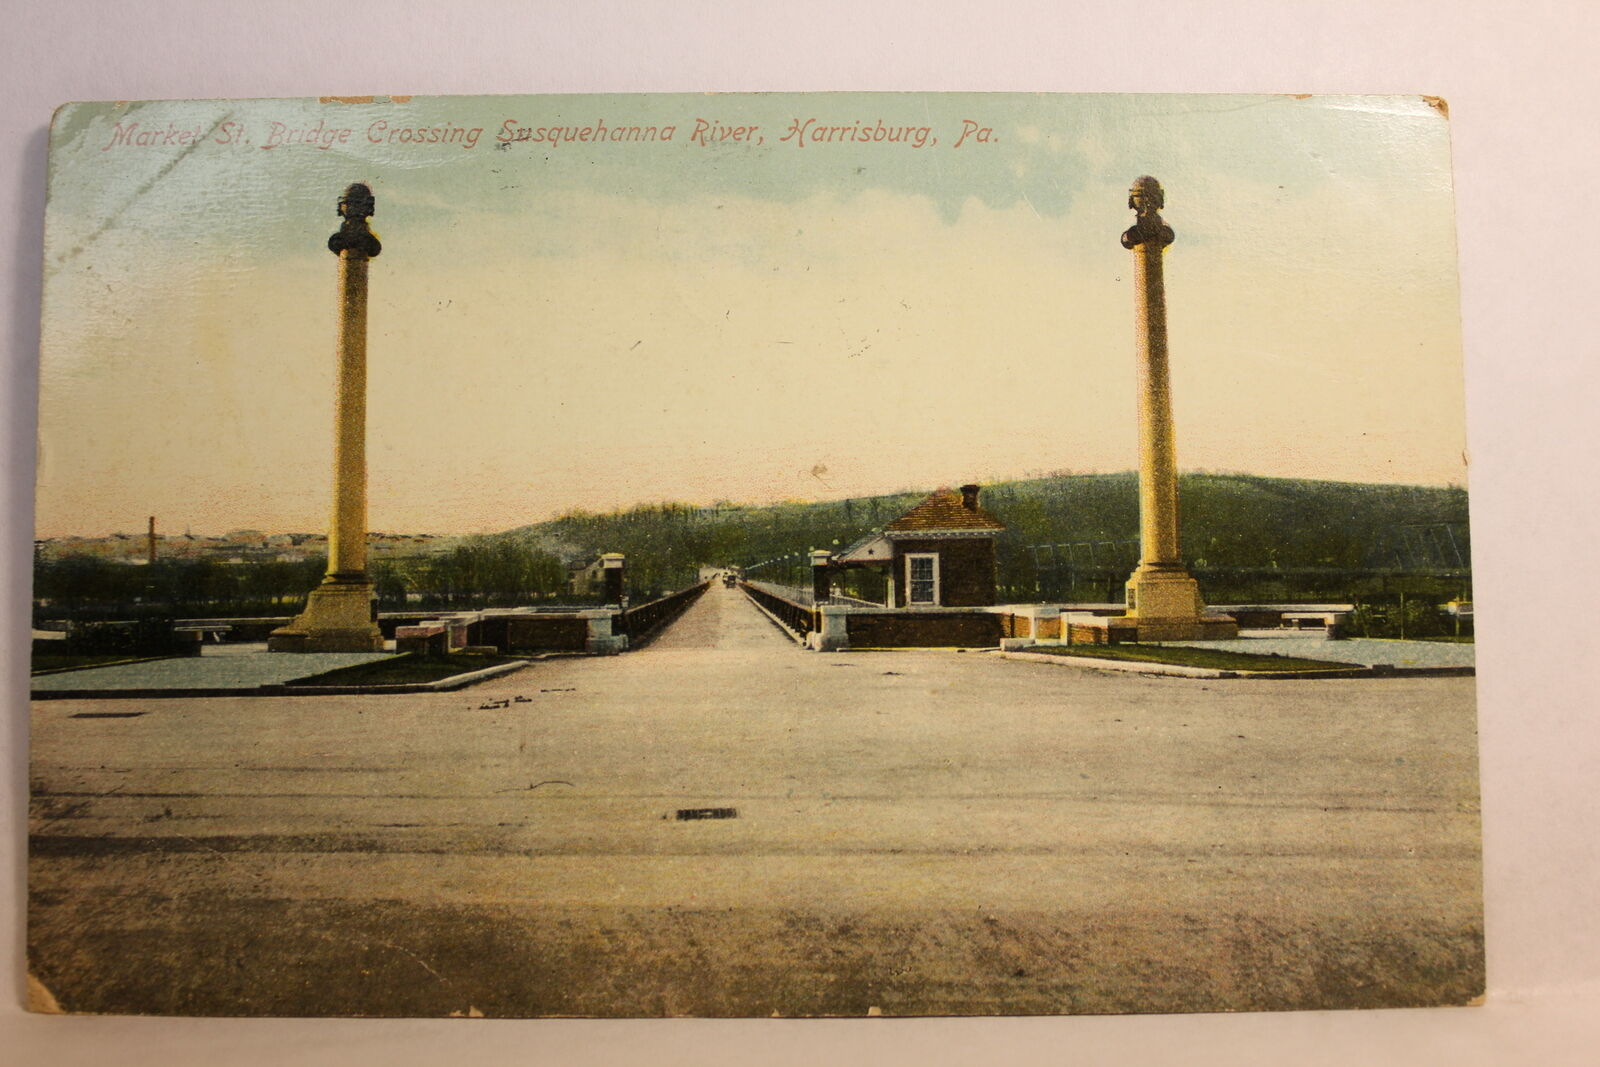 Postcard Market St. Bridge Crossing Susquehanna River Harrisburg PA C15